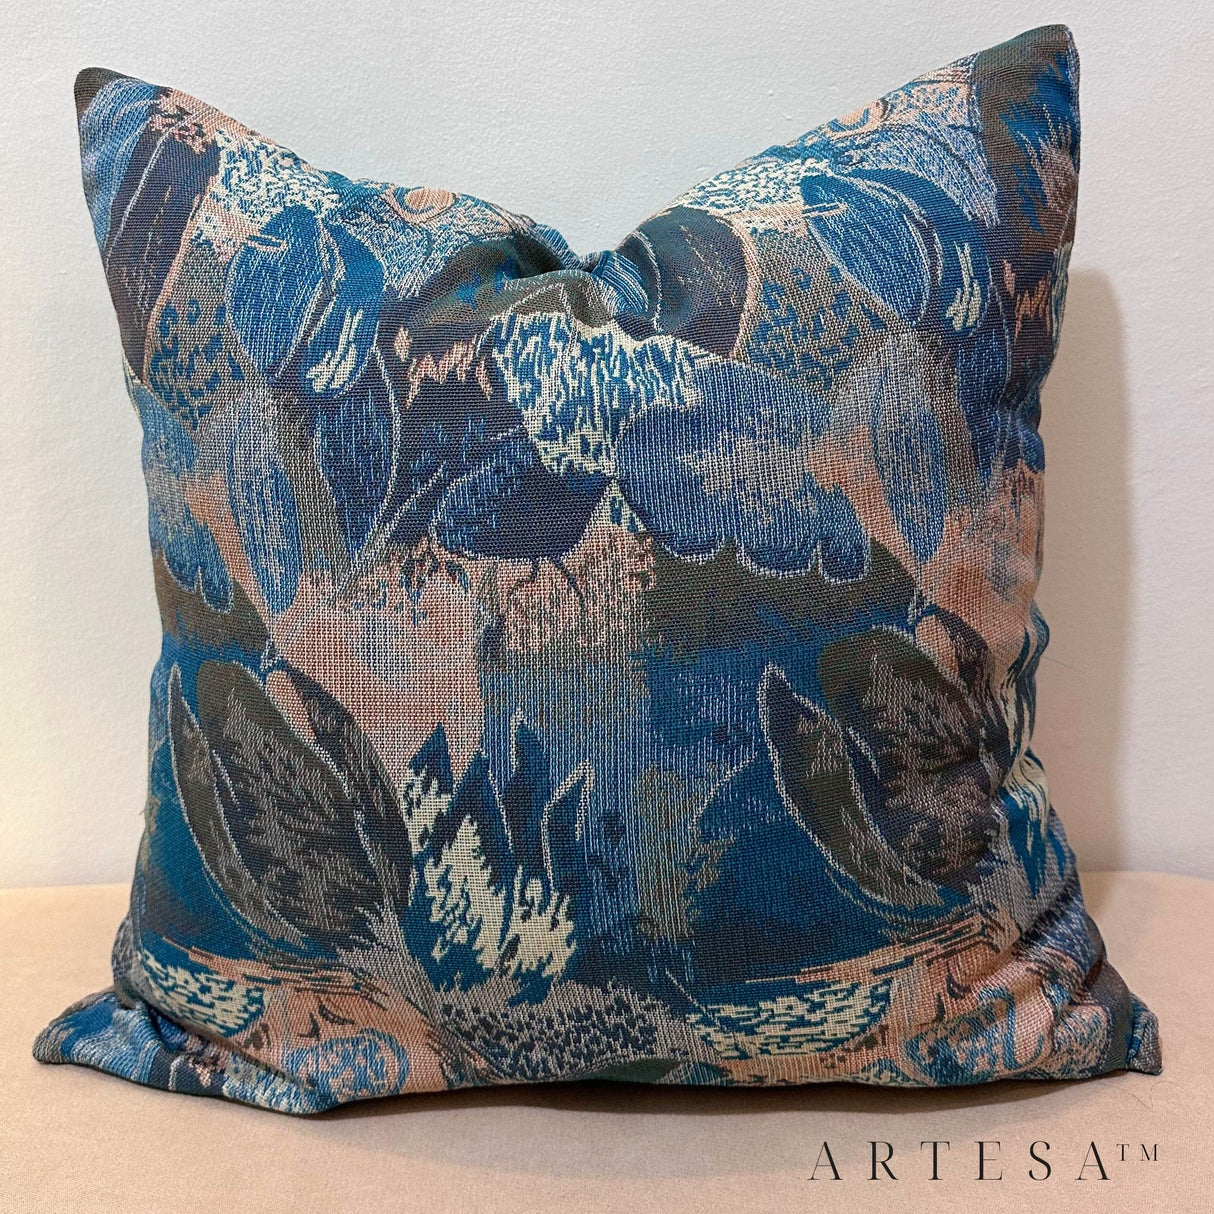 Artesa Diwata Premium Cotton Brocade Throw Pillow Cover with hidden zipper closure - Elegant Home Decor Accent